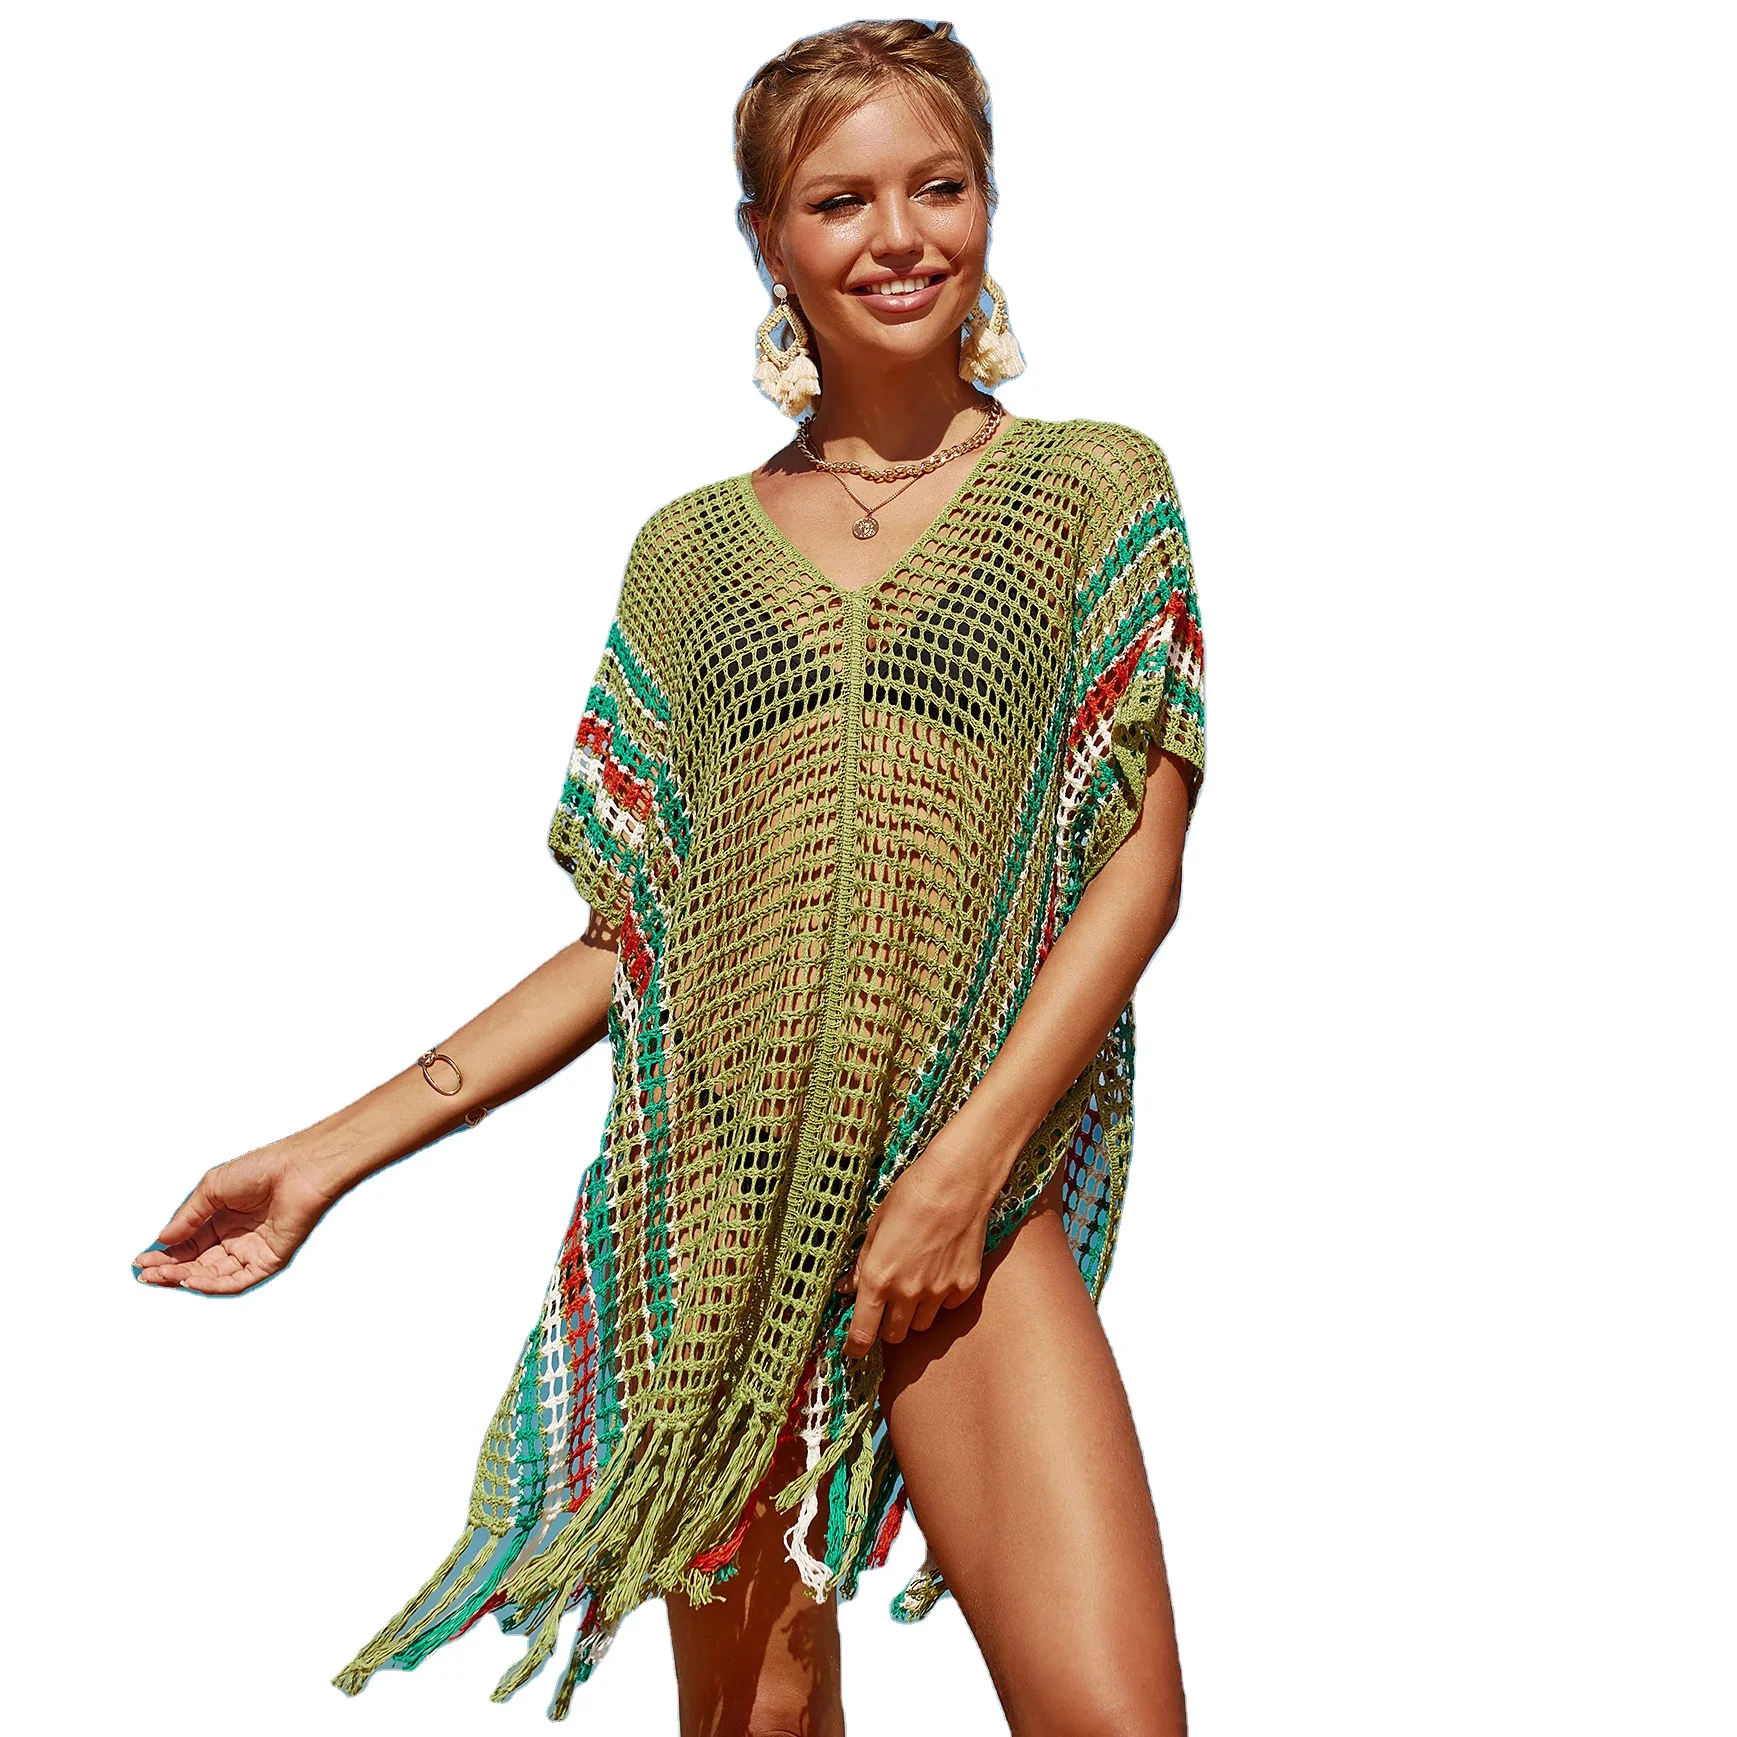 

2022 designer Hollow thread knitted tassel rainbow blouse crochet swimwear bikini see through cover ups beach wear dress